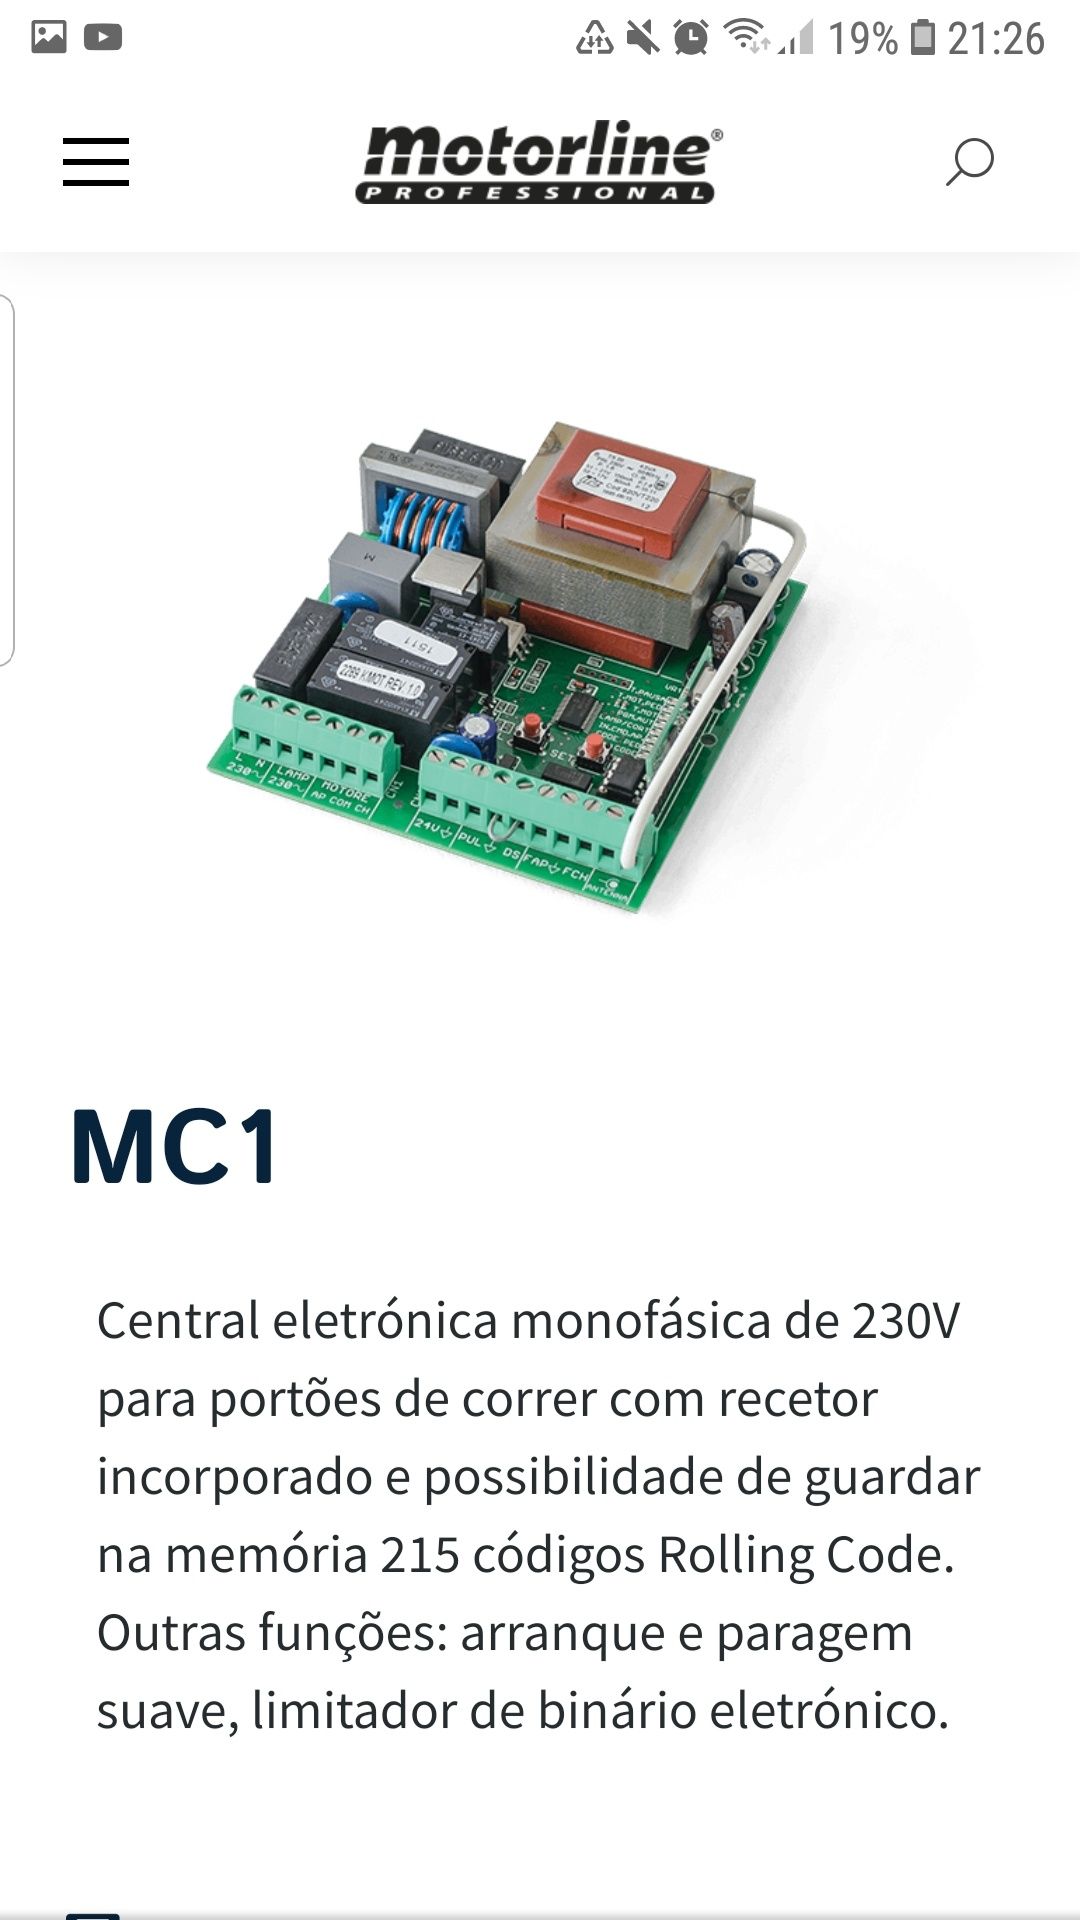 Central motorline MC1